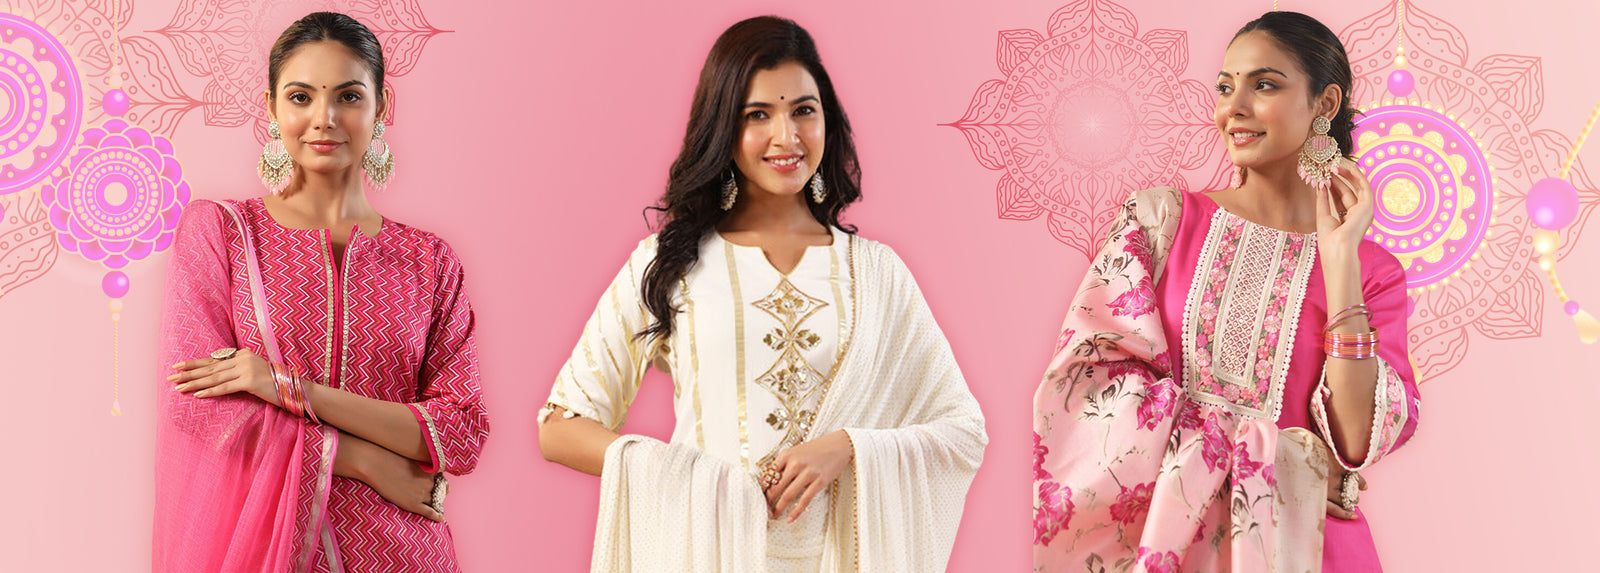 Redefine Rakshabandhan Gifting with Exquisite Ethnic Suit Sets